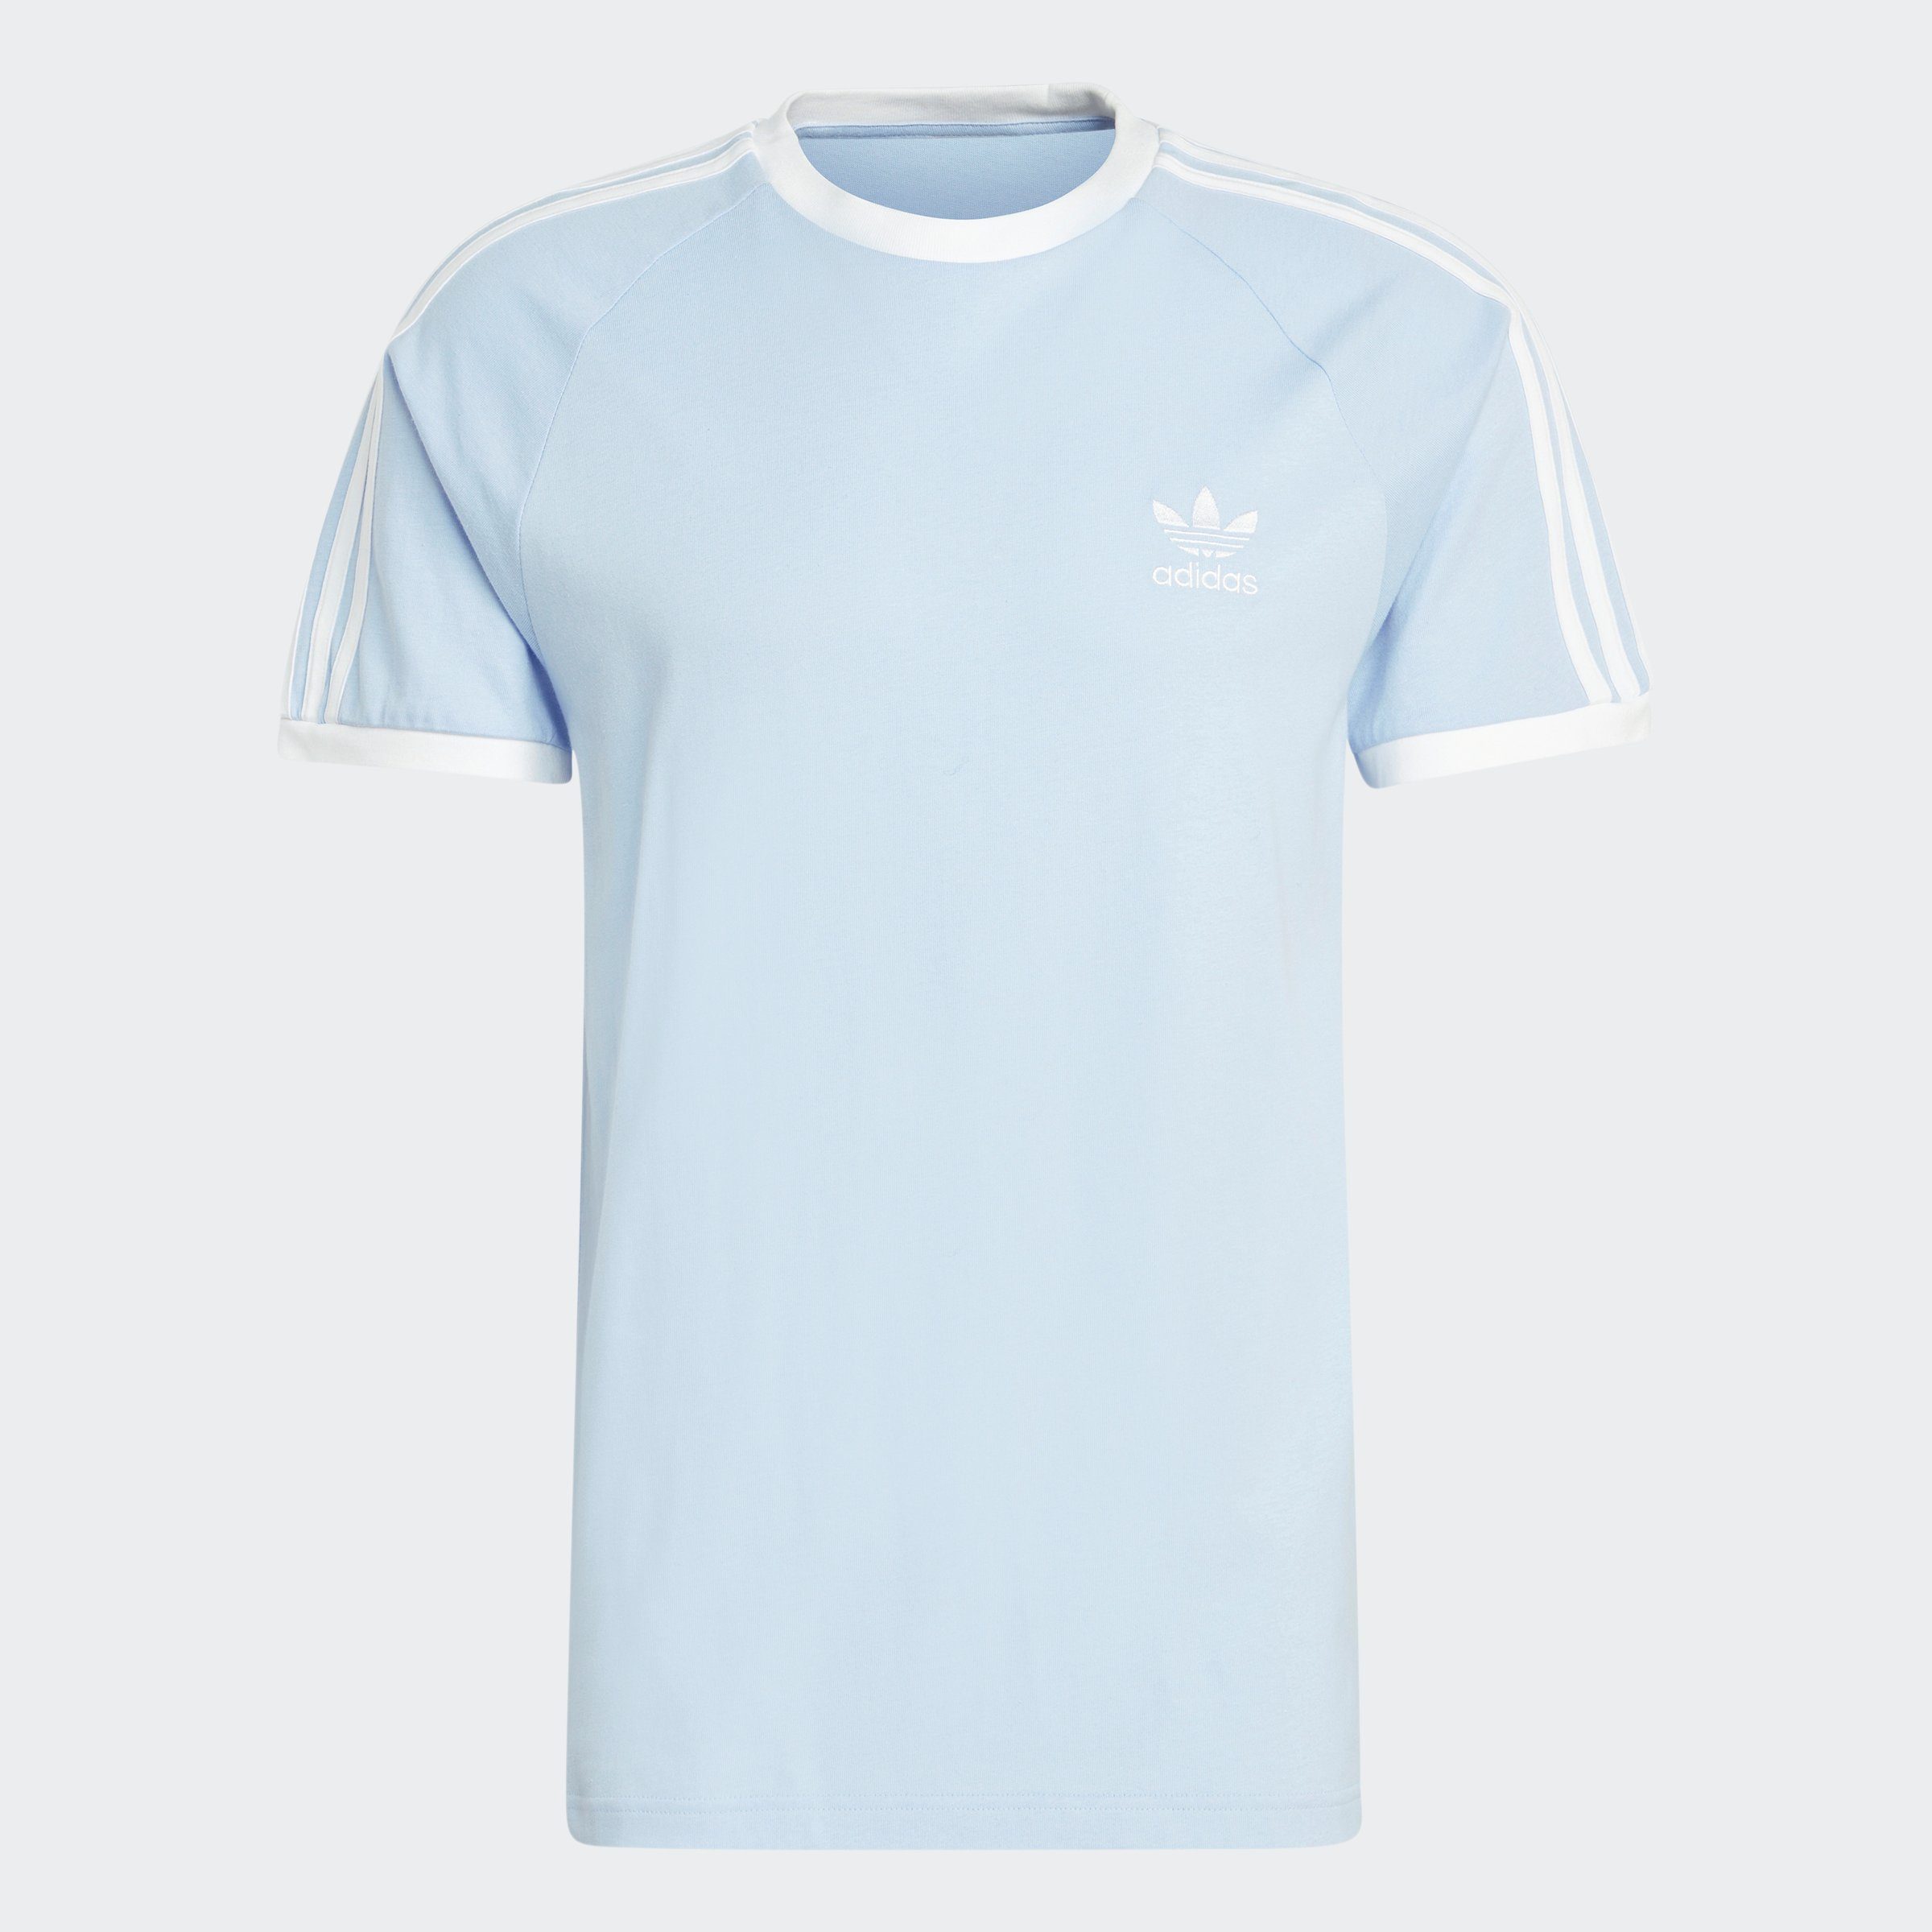 Dawn adidas 3-STRIPES TEE Originals T-Shirt Blue